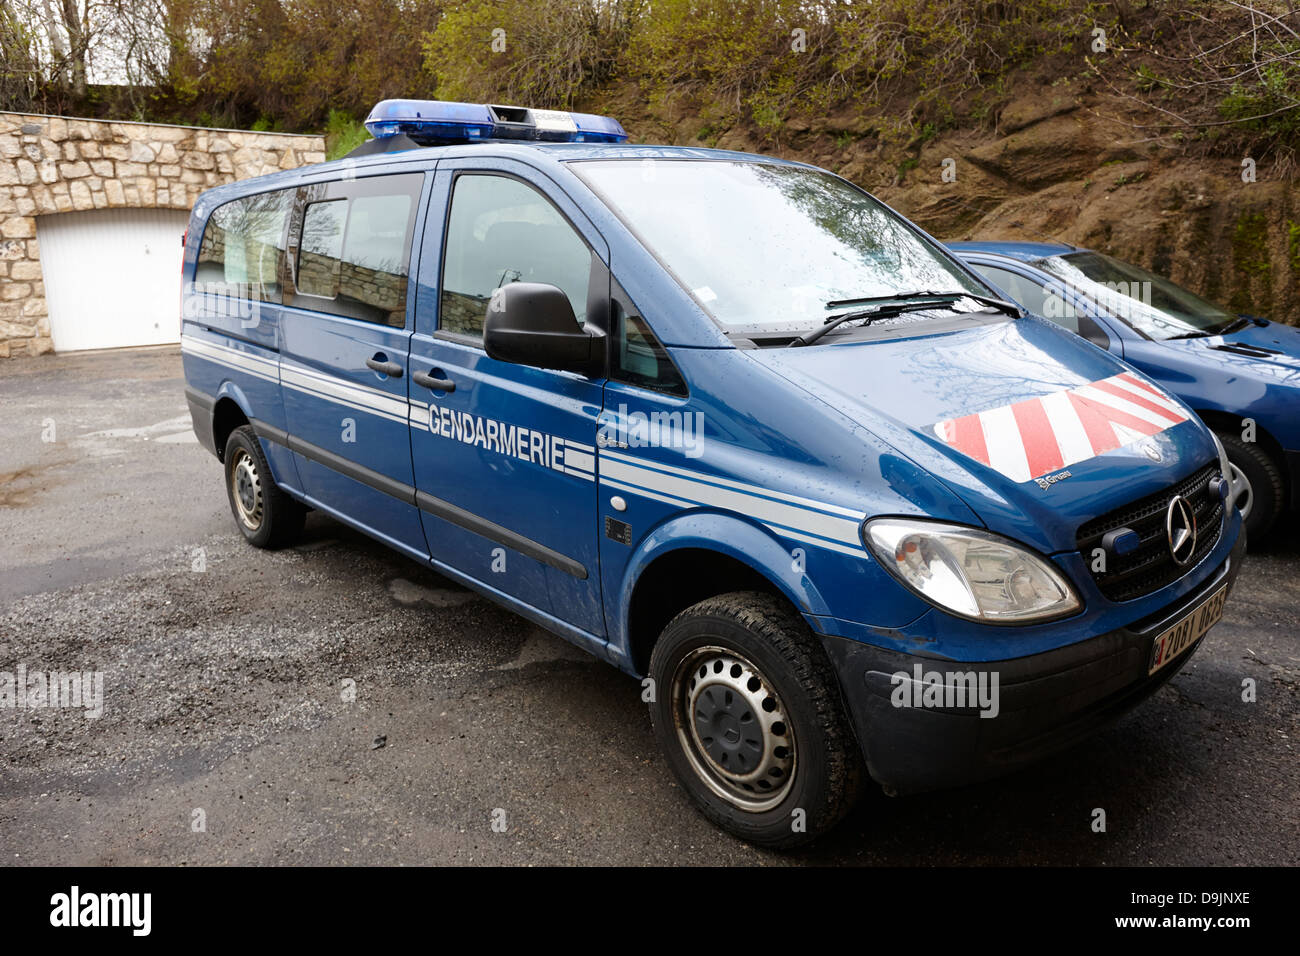 Gendarmerie nationale polizia van veicolo mont-louis pyrenees-orientales francia Foto Stock